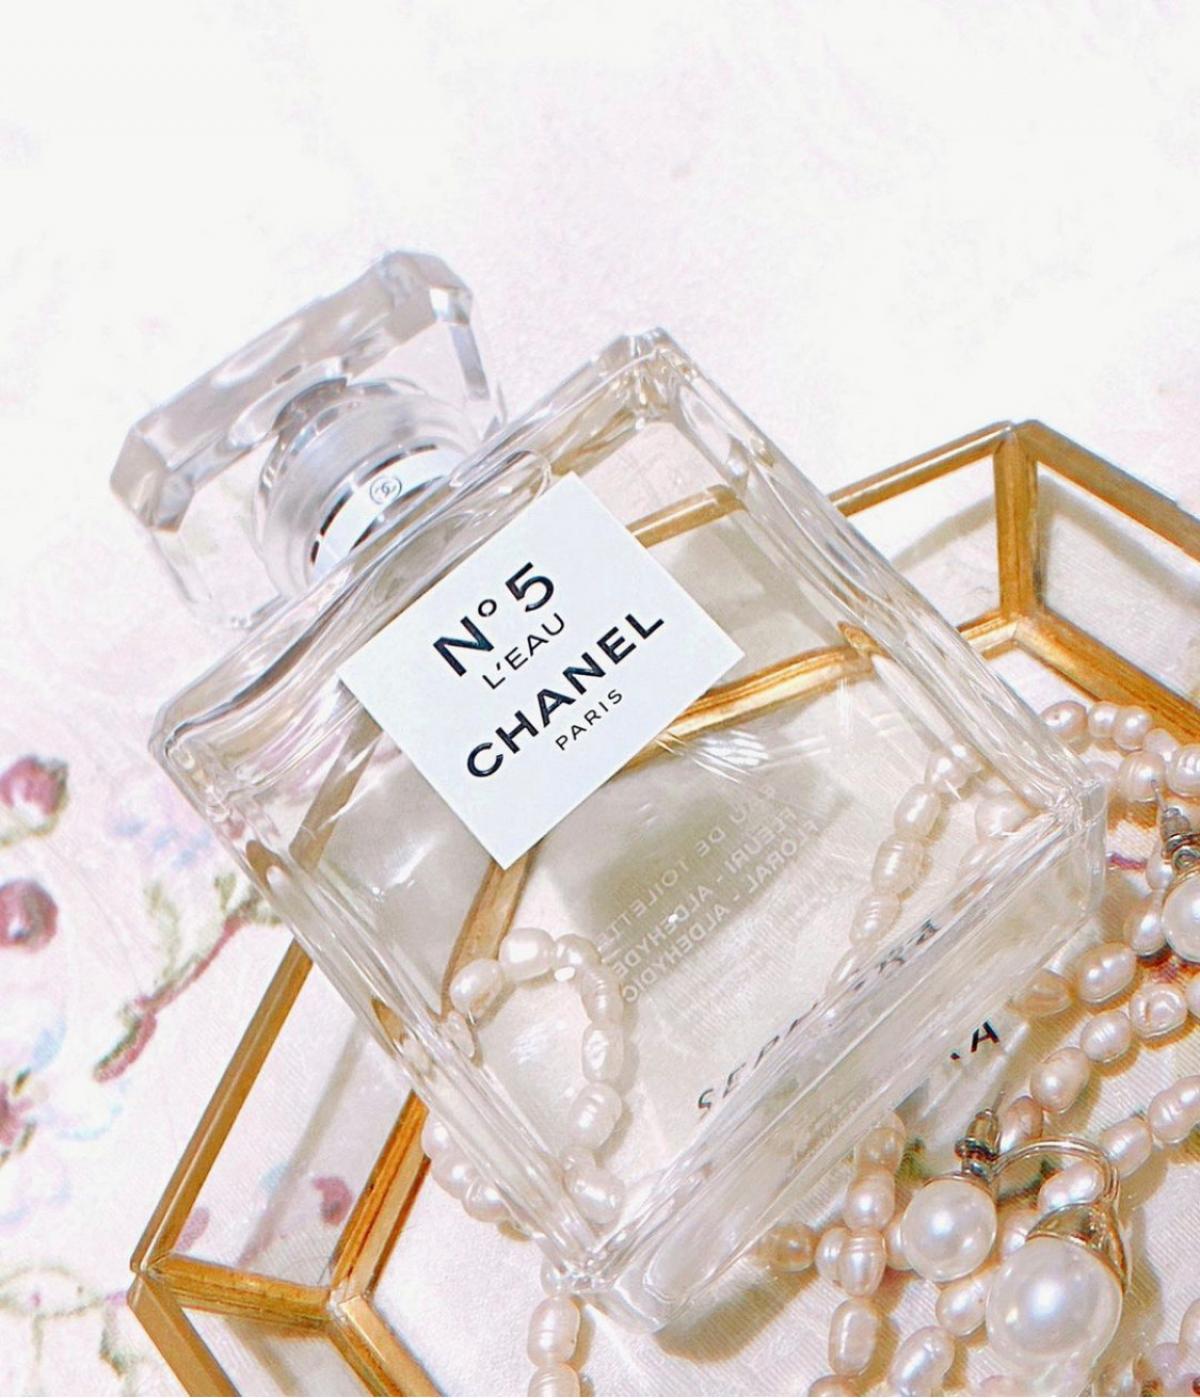 Chanel No 5 L'Eau Chanel 香水 - 一款 2016年 女用 香水